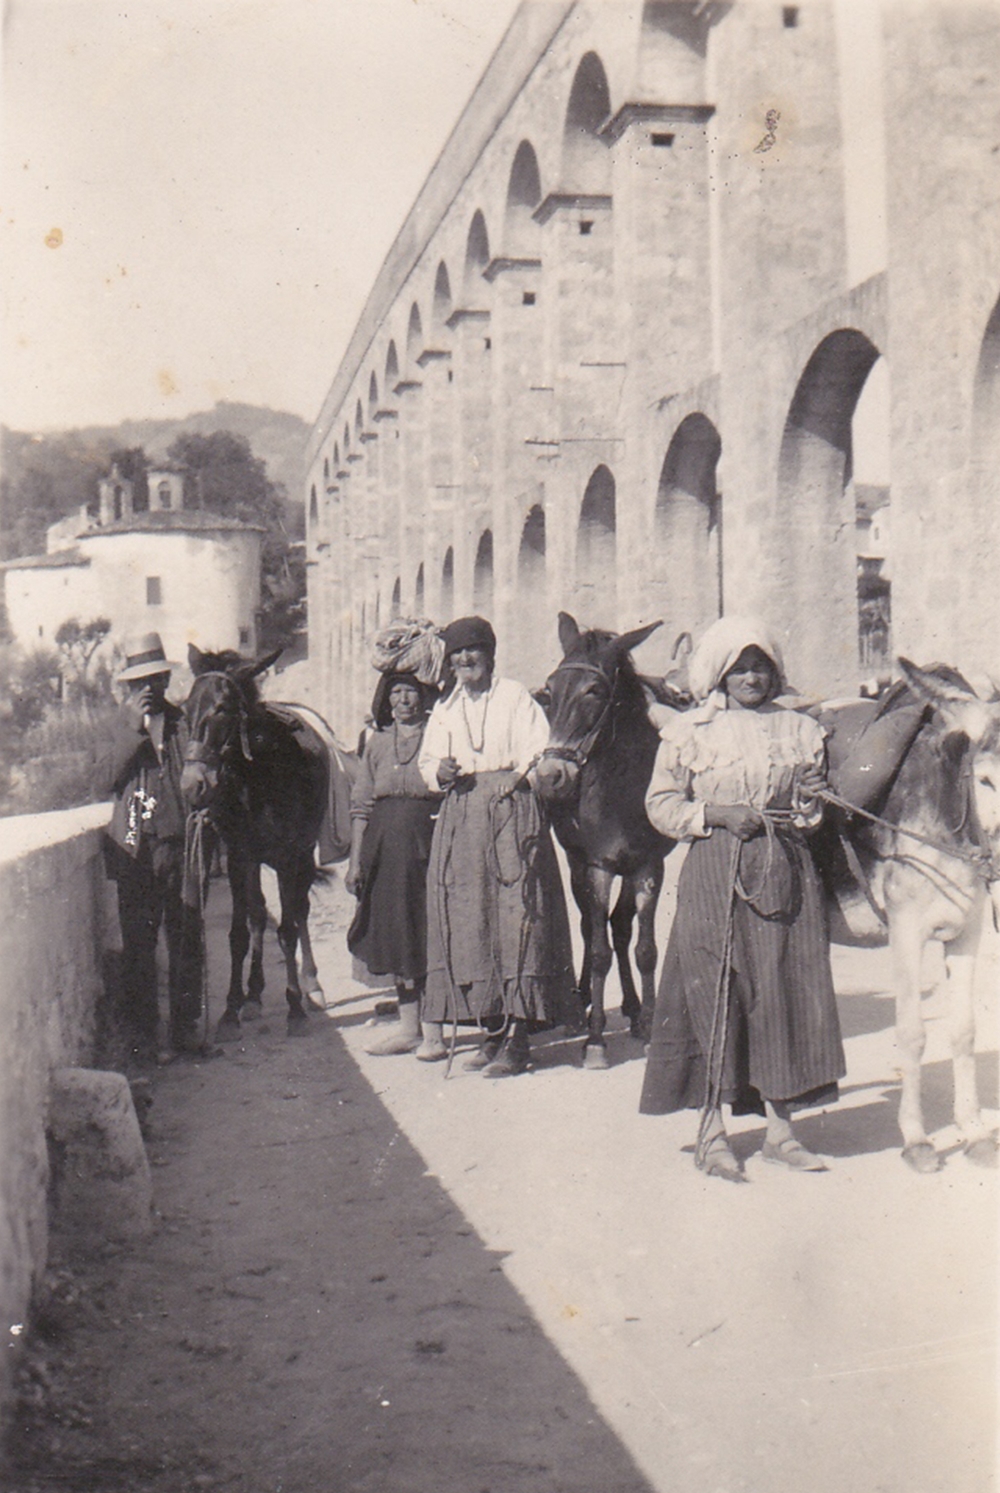 Paesants on the Cartaro Bridge, 1919